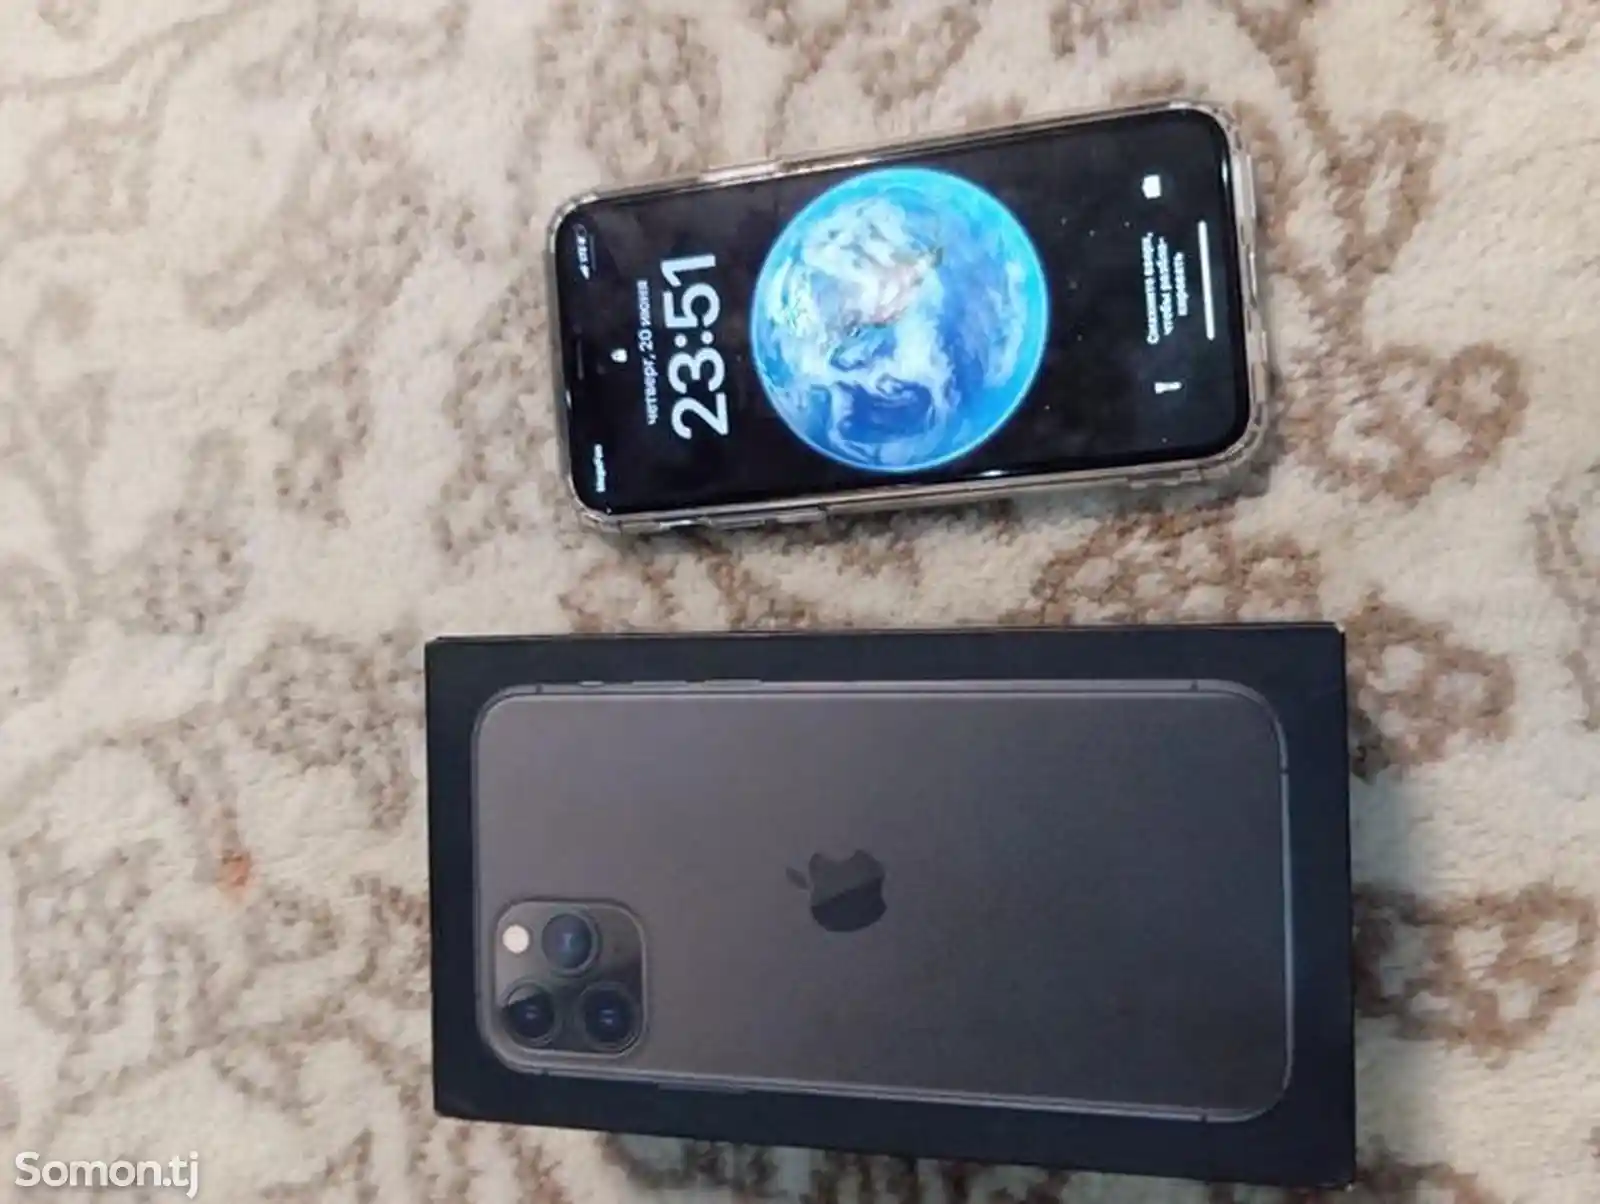 Apple iPhone 11 Pro, 64 gb, Silver-2